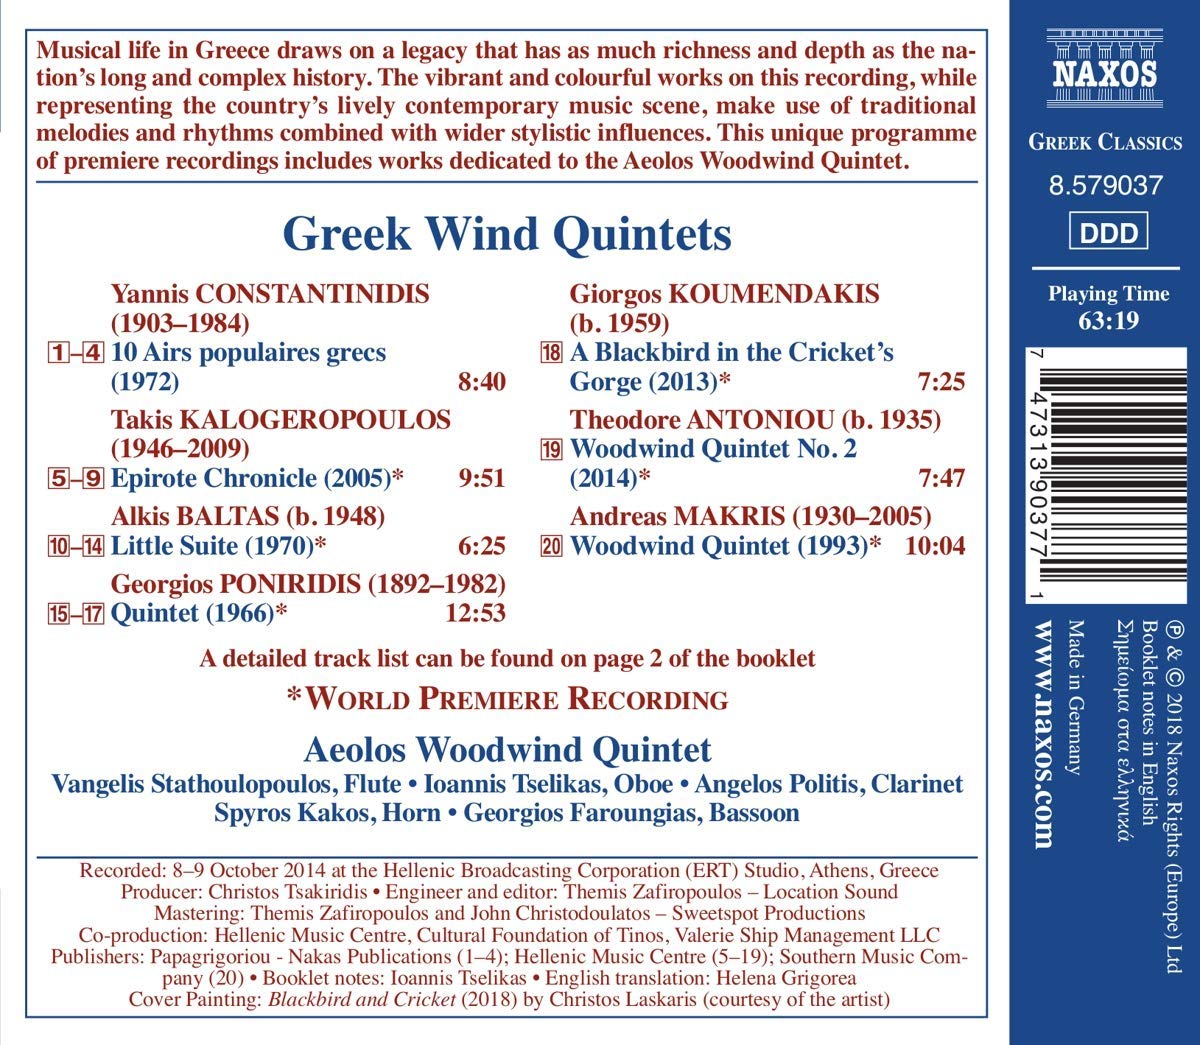 Aeolos Woodwind Quintet 그리스 작곡가들의 목관 오중주 작품집 (Greek Wind Quintets)